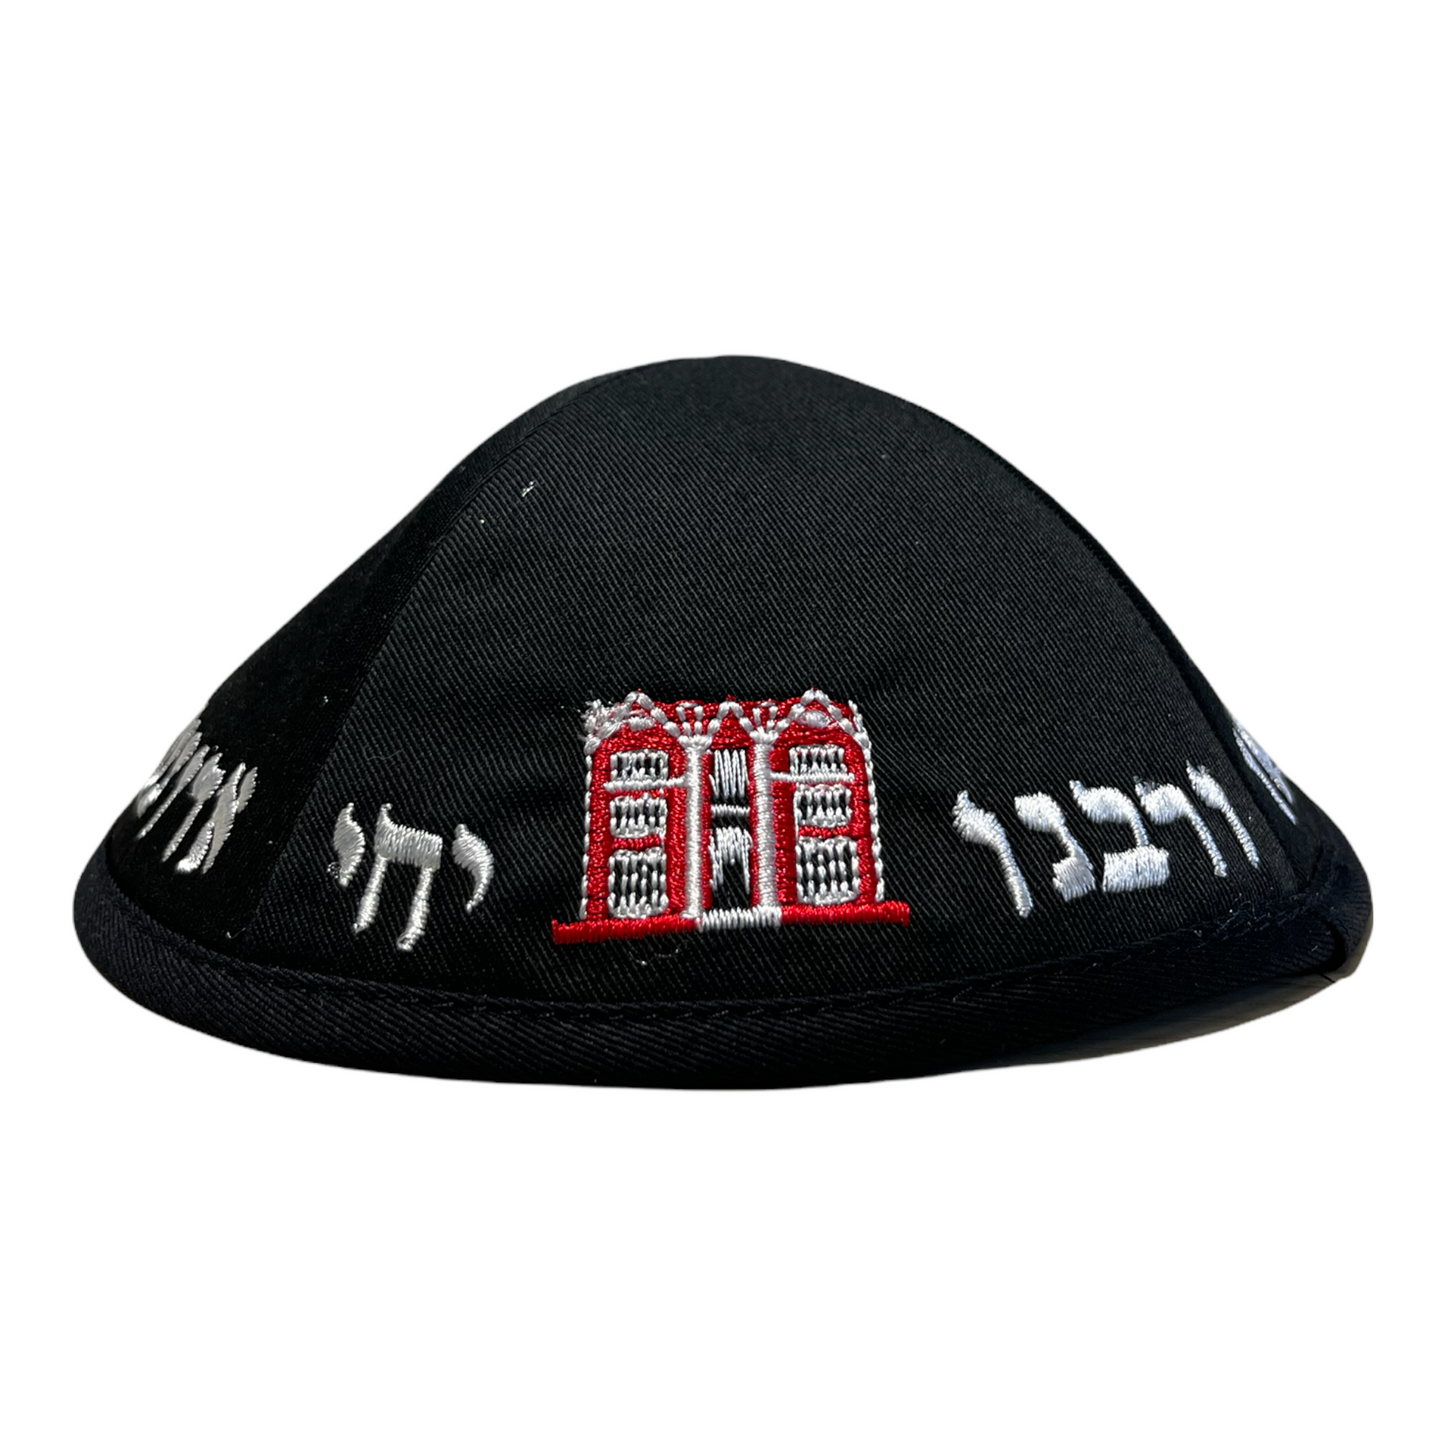 Chabad kippah 22cm embroidery 770 lubavitch kippah eastern pkwy rabbi lubavitch